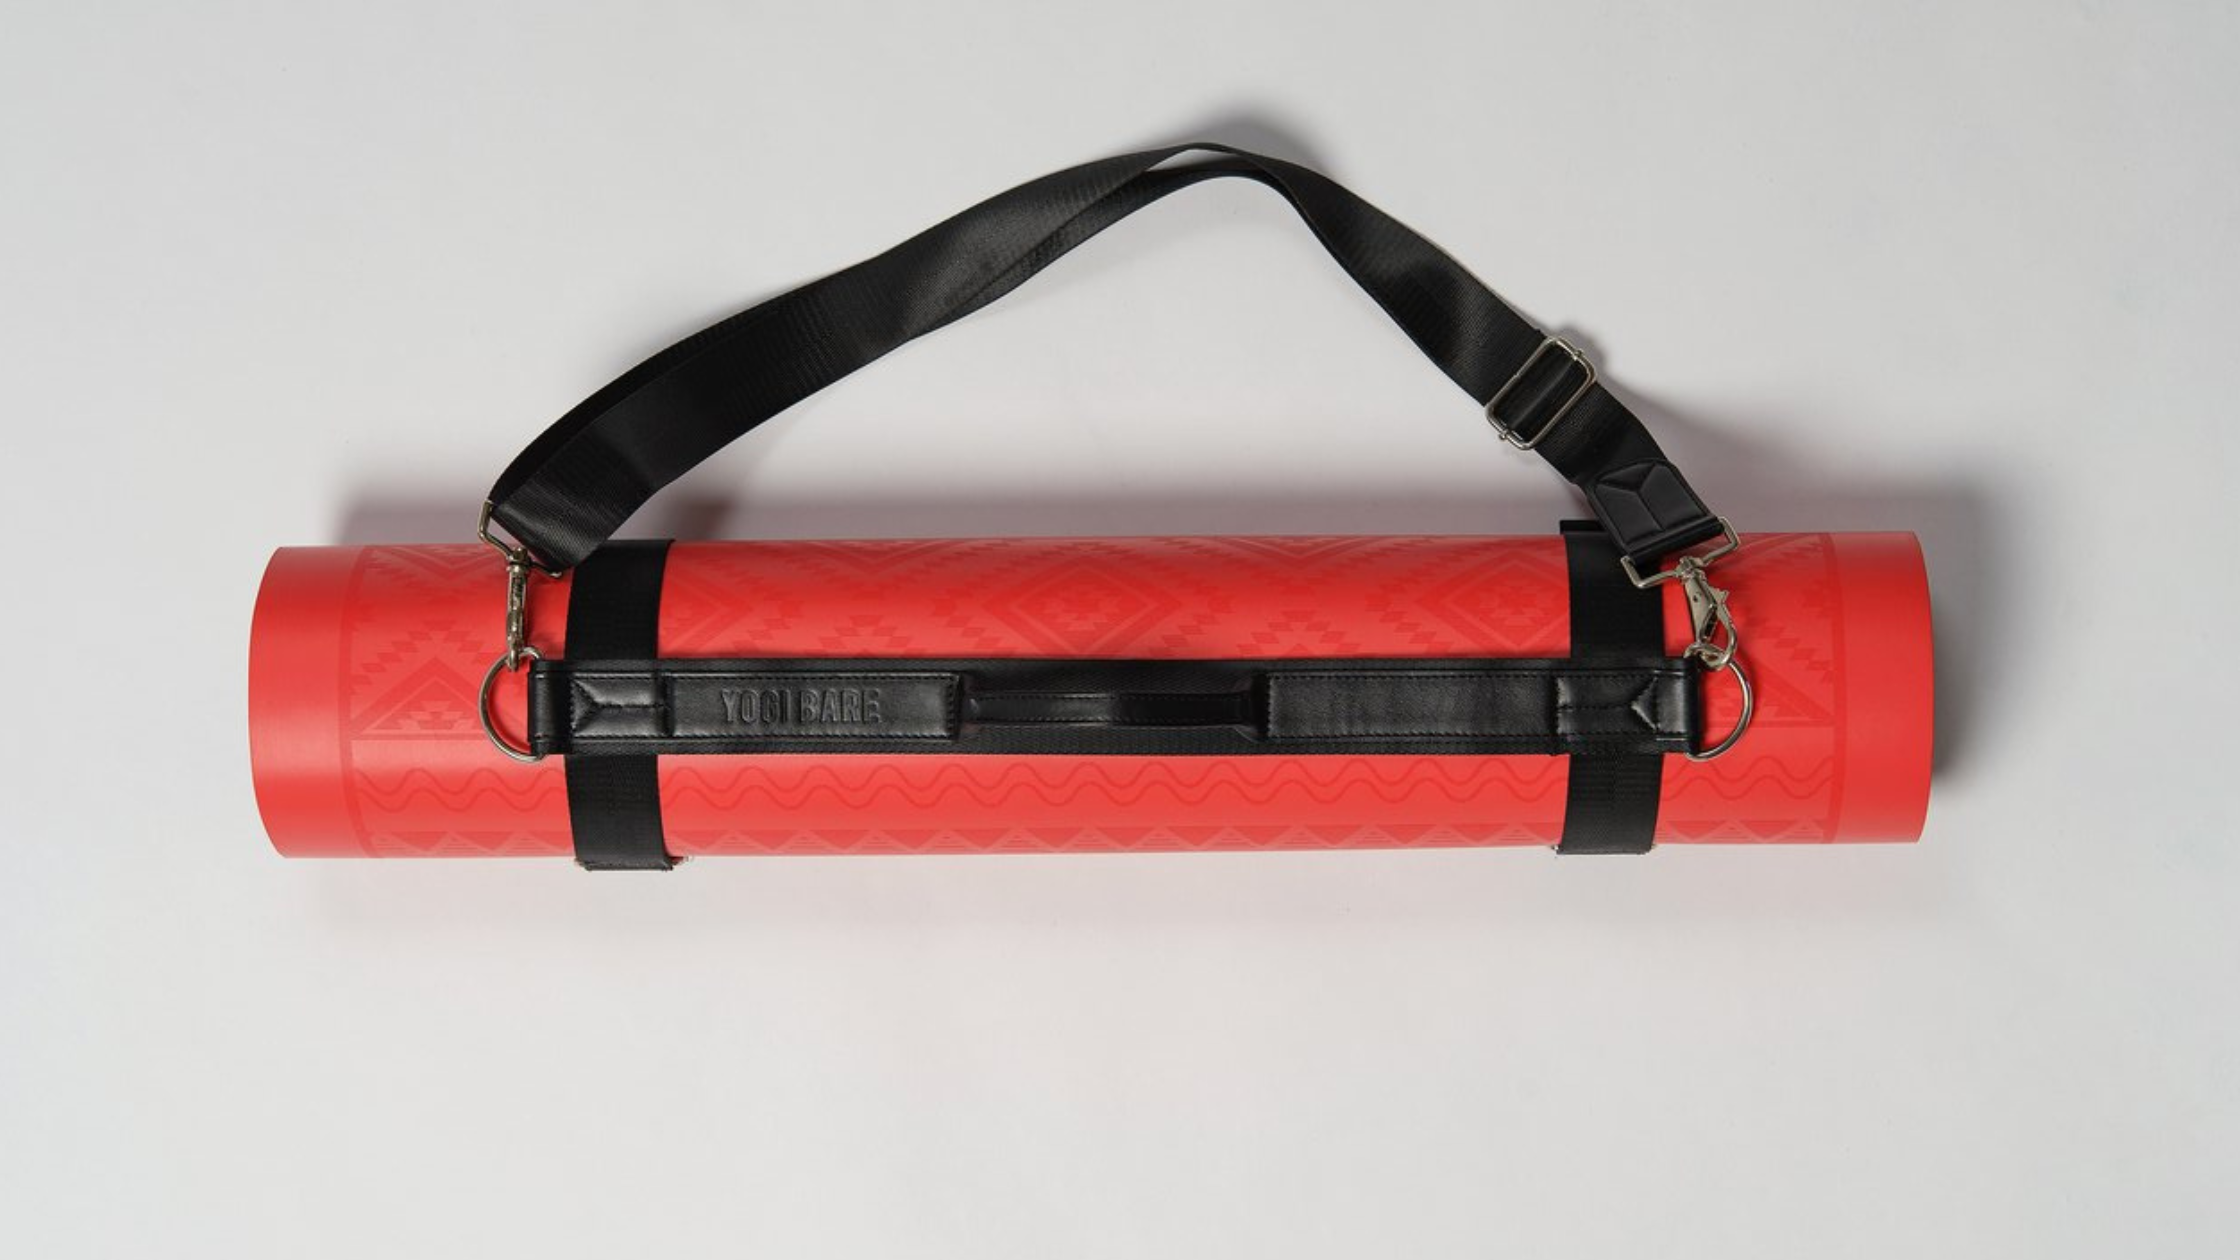 Adidas strap for Yoga Mat